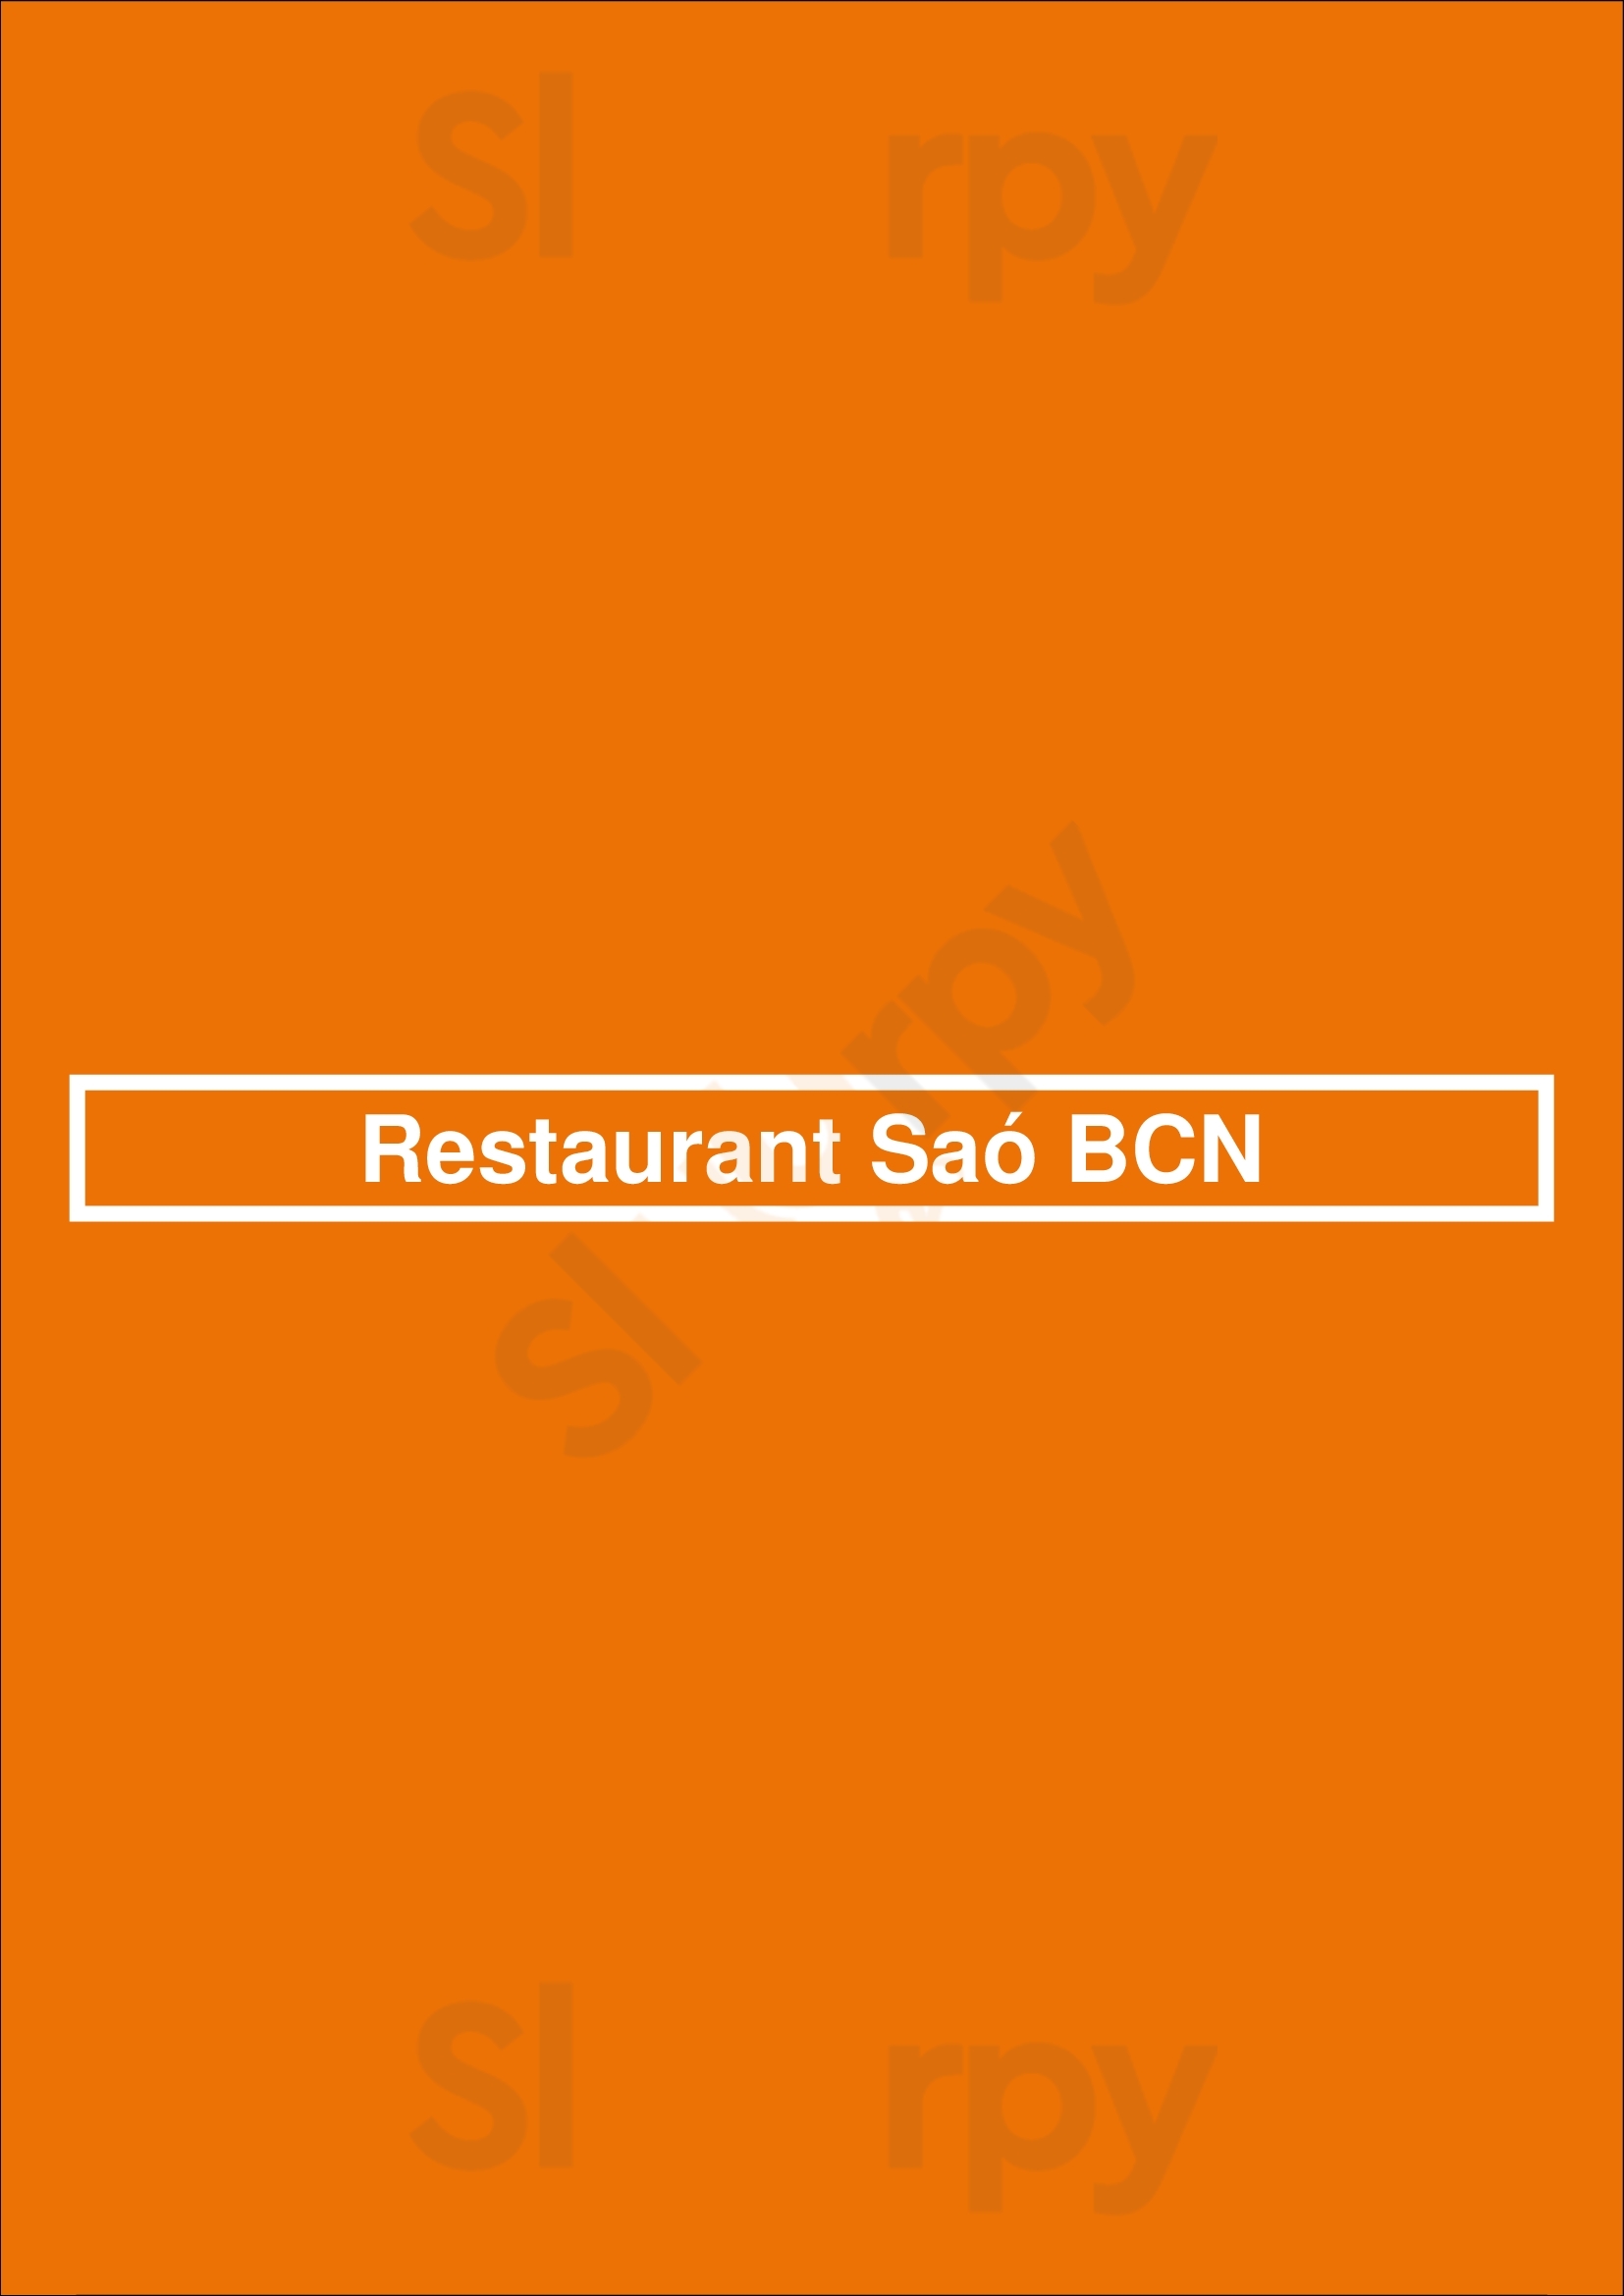 Restaurant Saó Bcn Barcelona Menu - 1